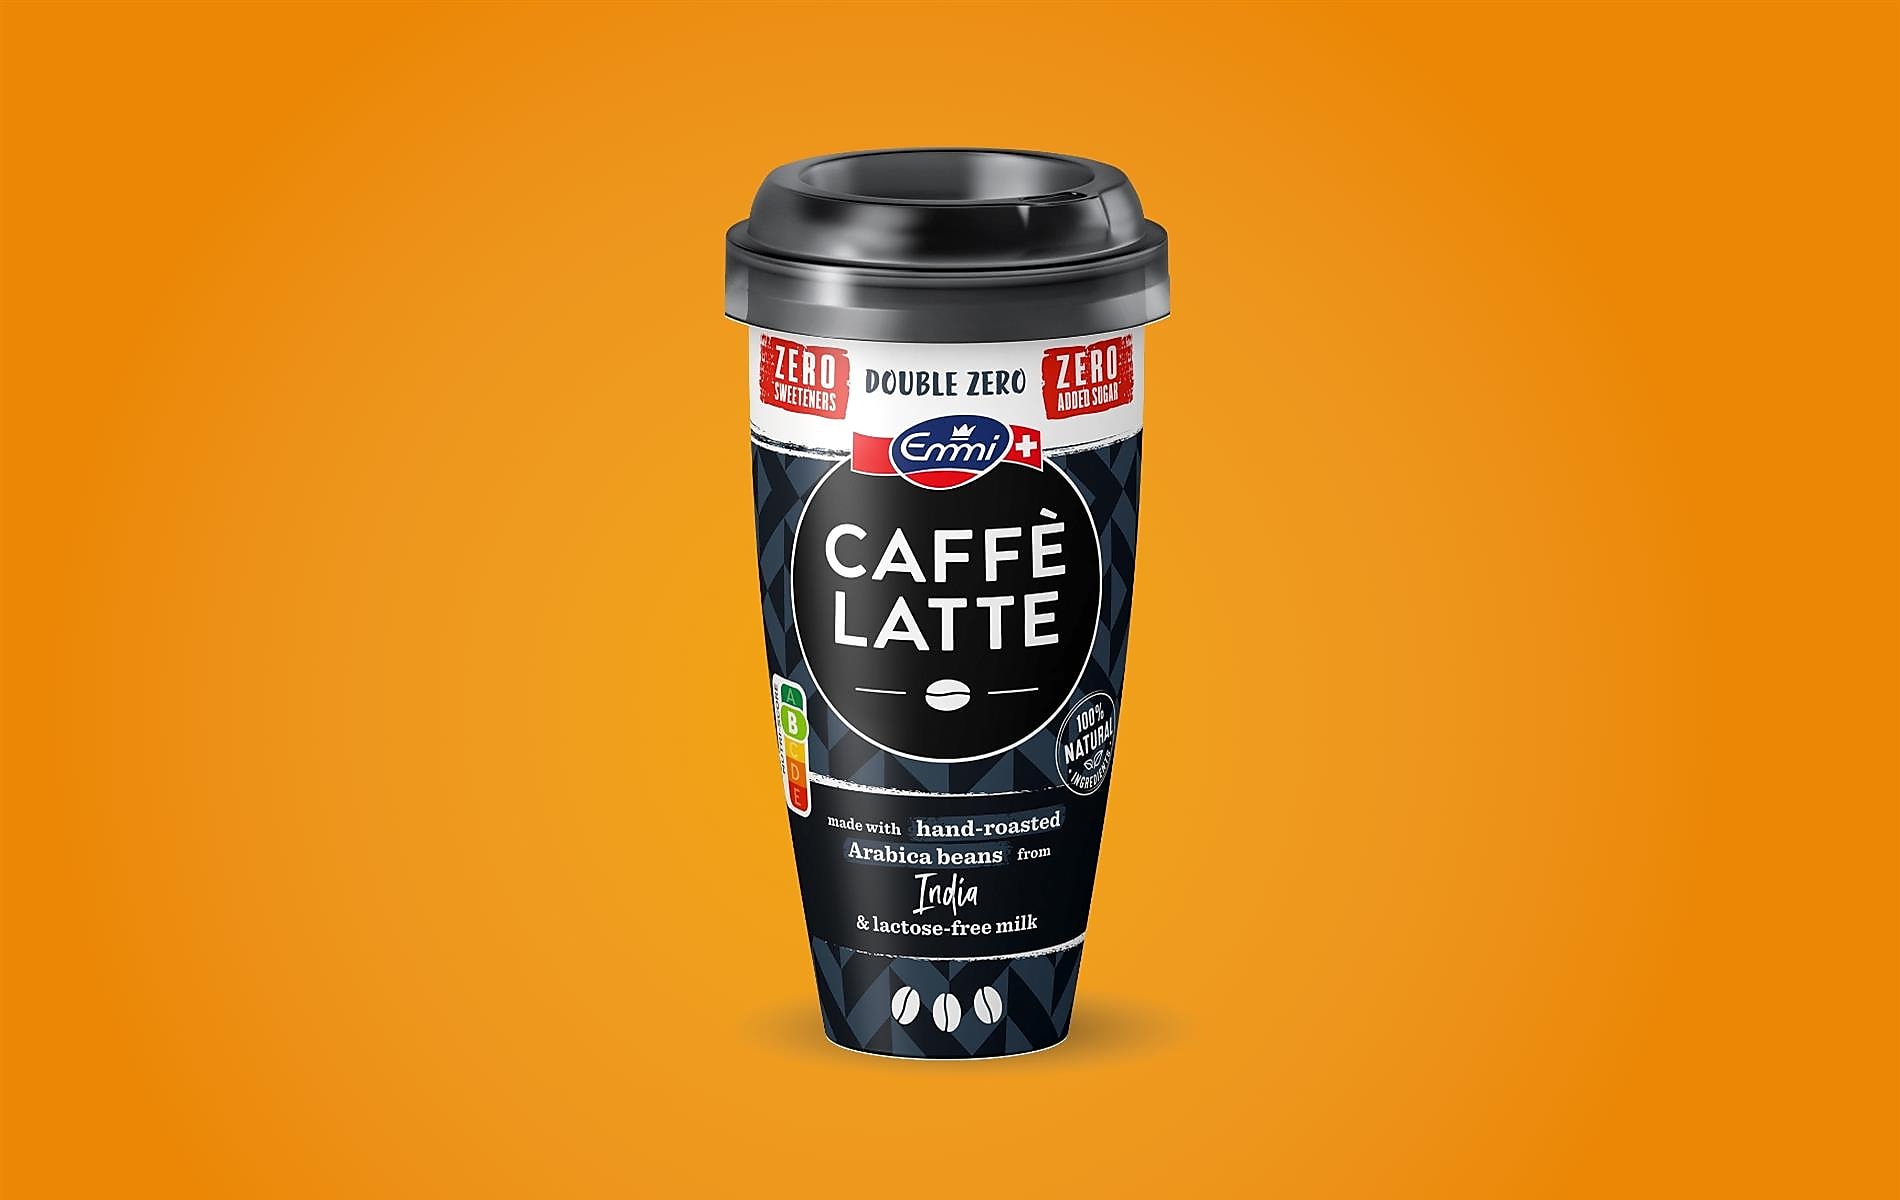 Shell Go+ Punktedeal: Emmi Caffè Latte um 200 Pkt